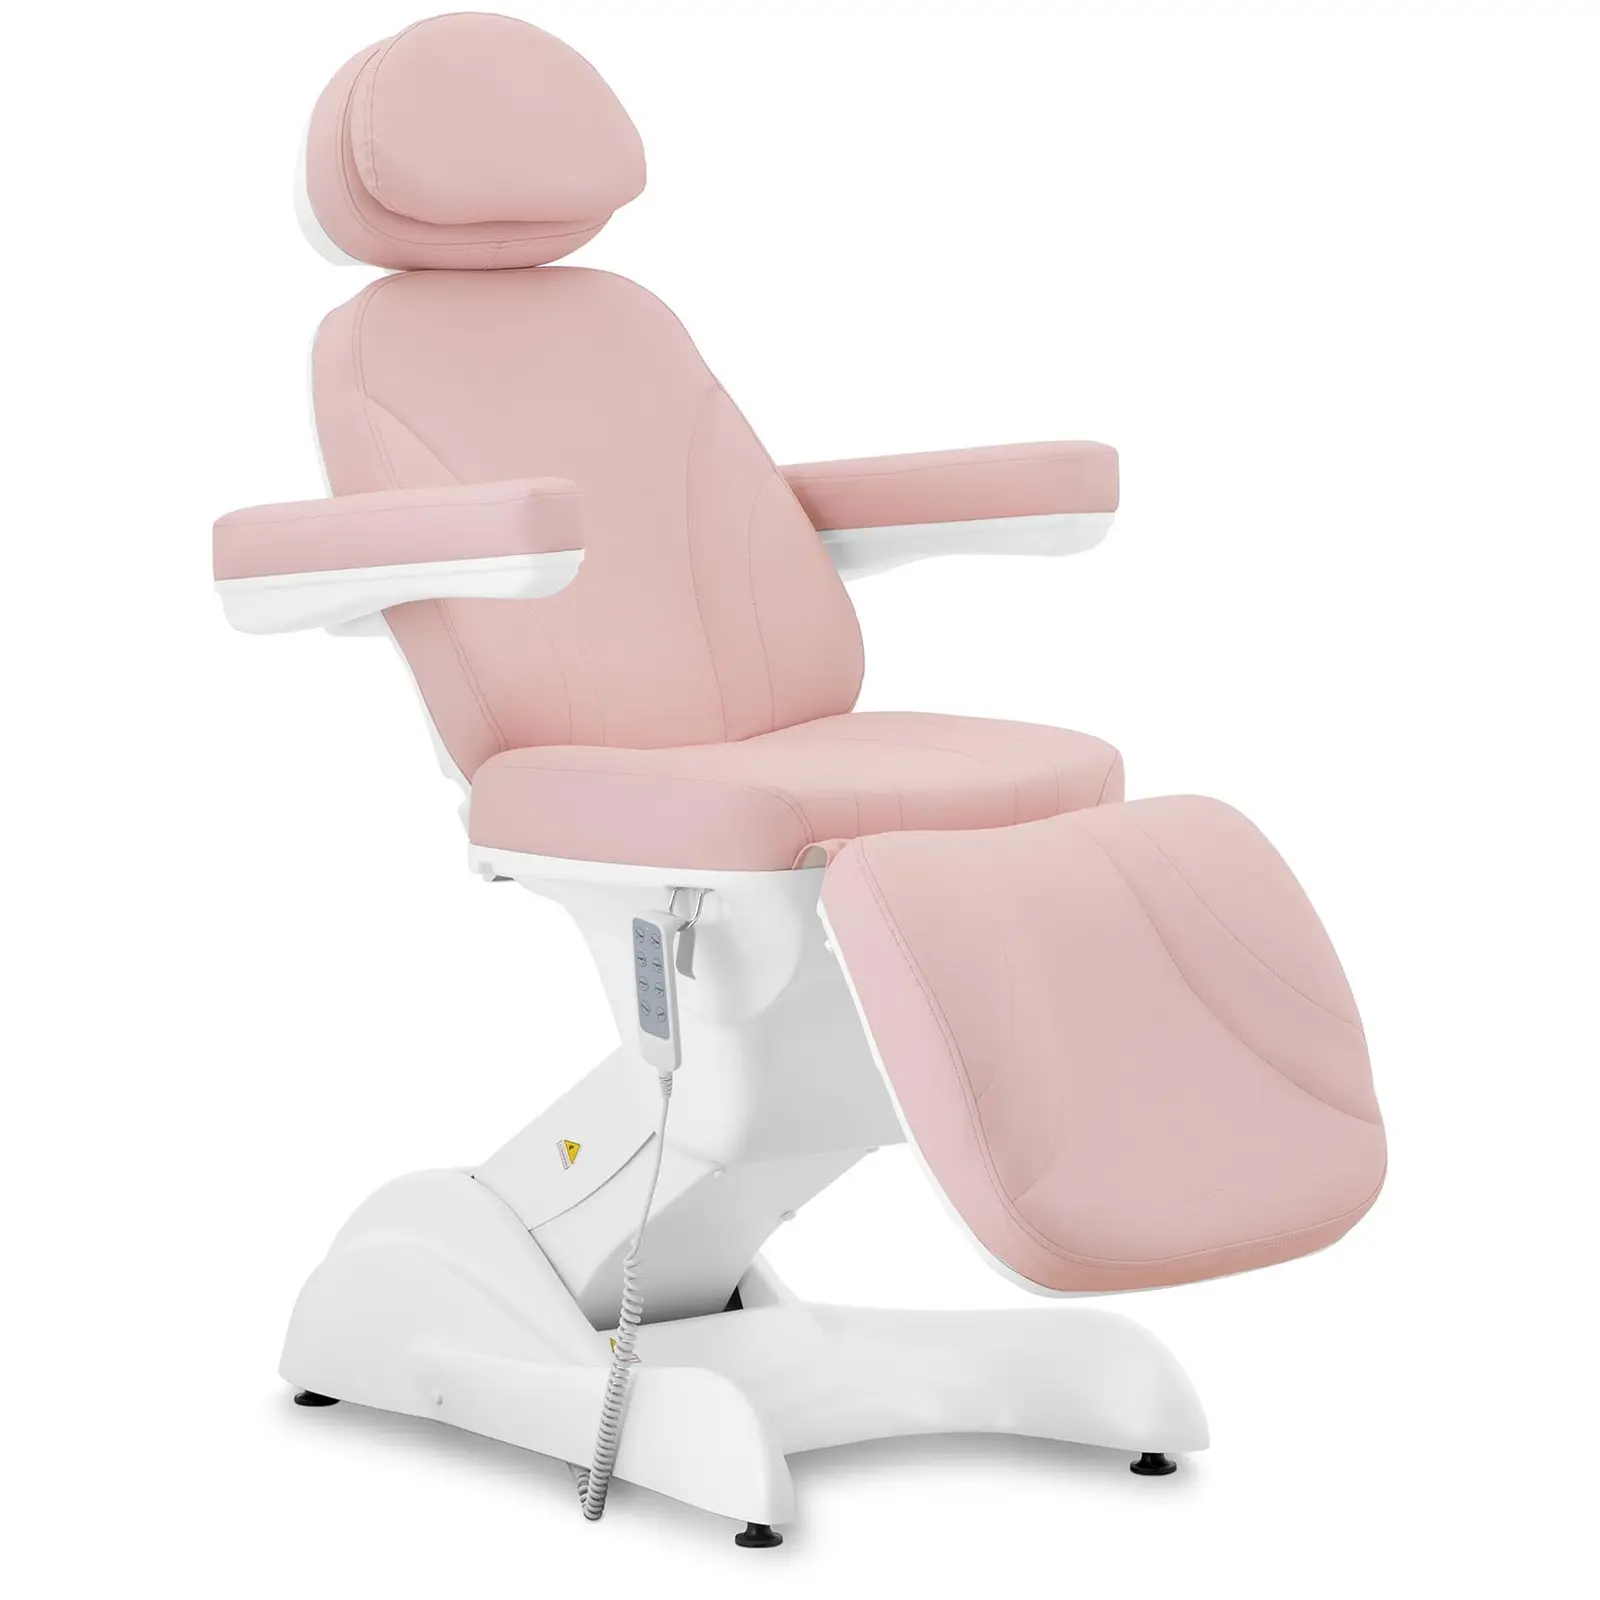 Kozmetički stolac - 200 W - 150 kg - Pink, White